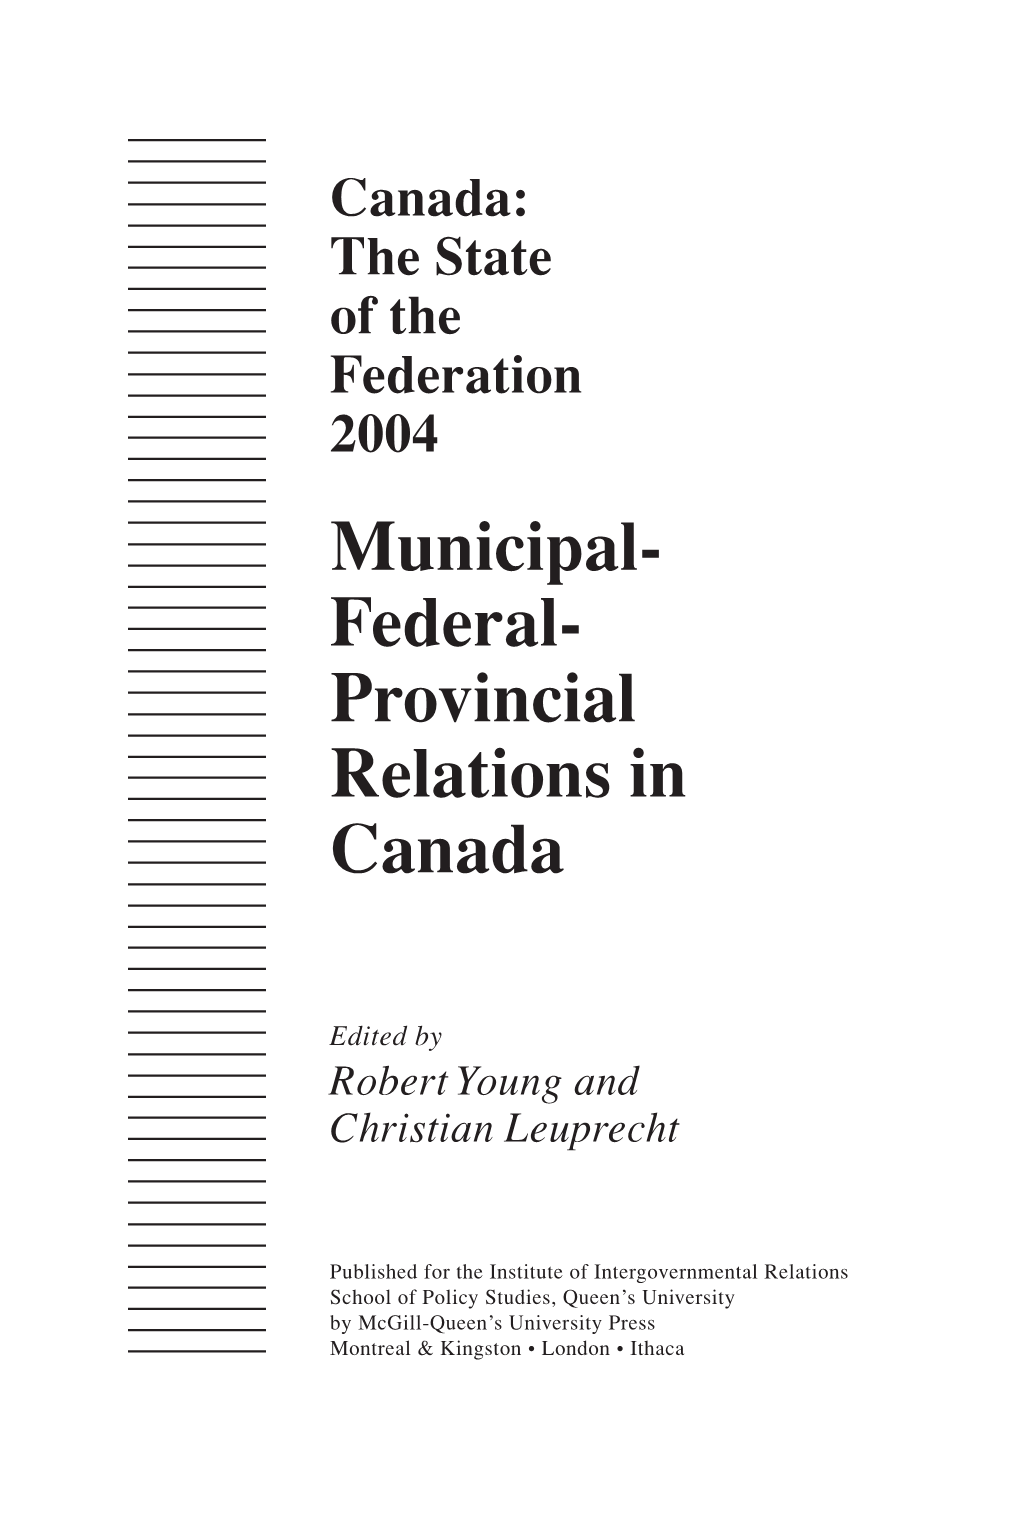 Municipal- Federal- Provincial Relations in Canada